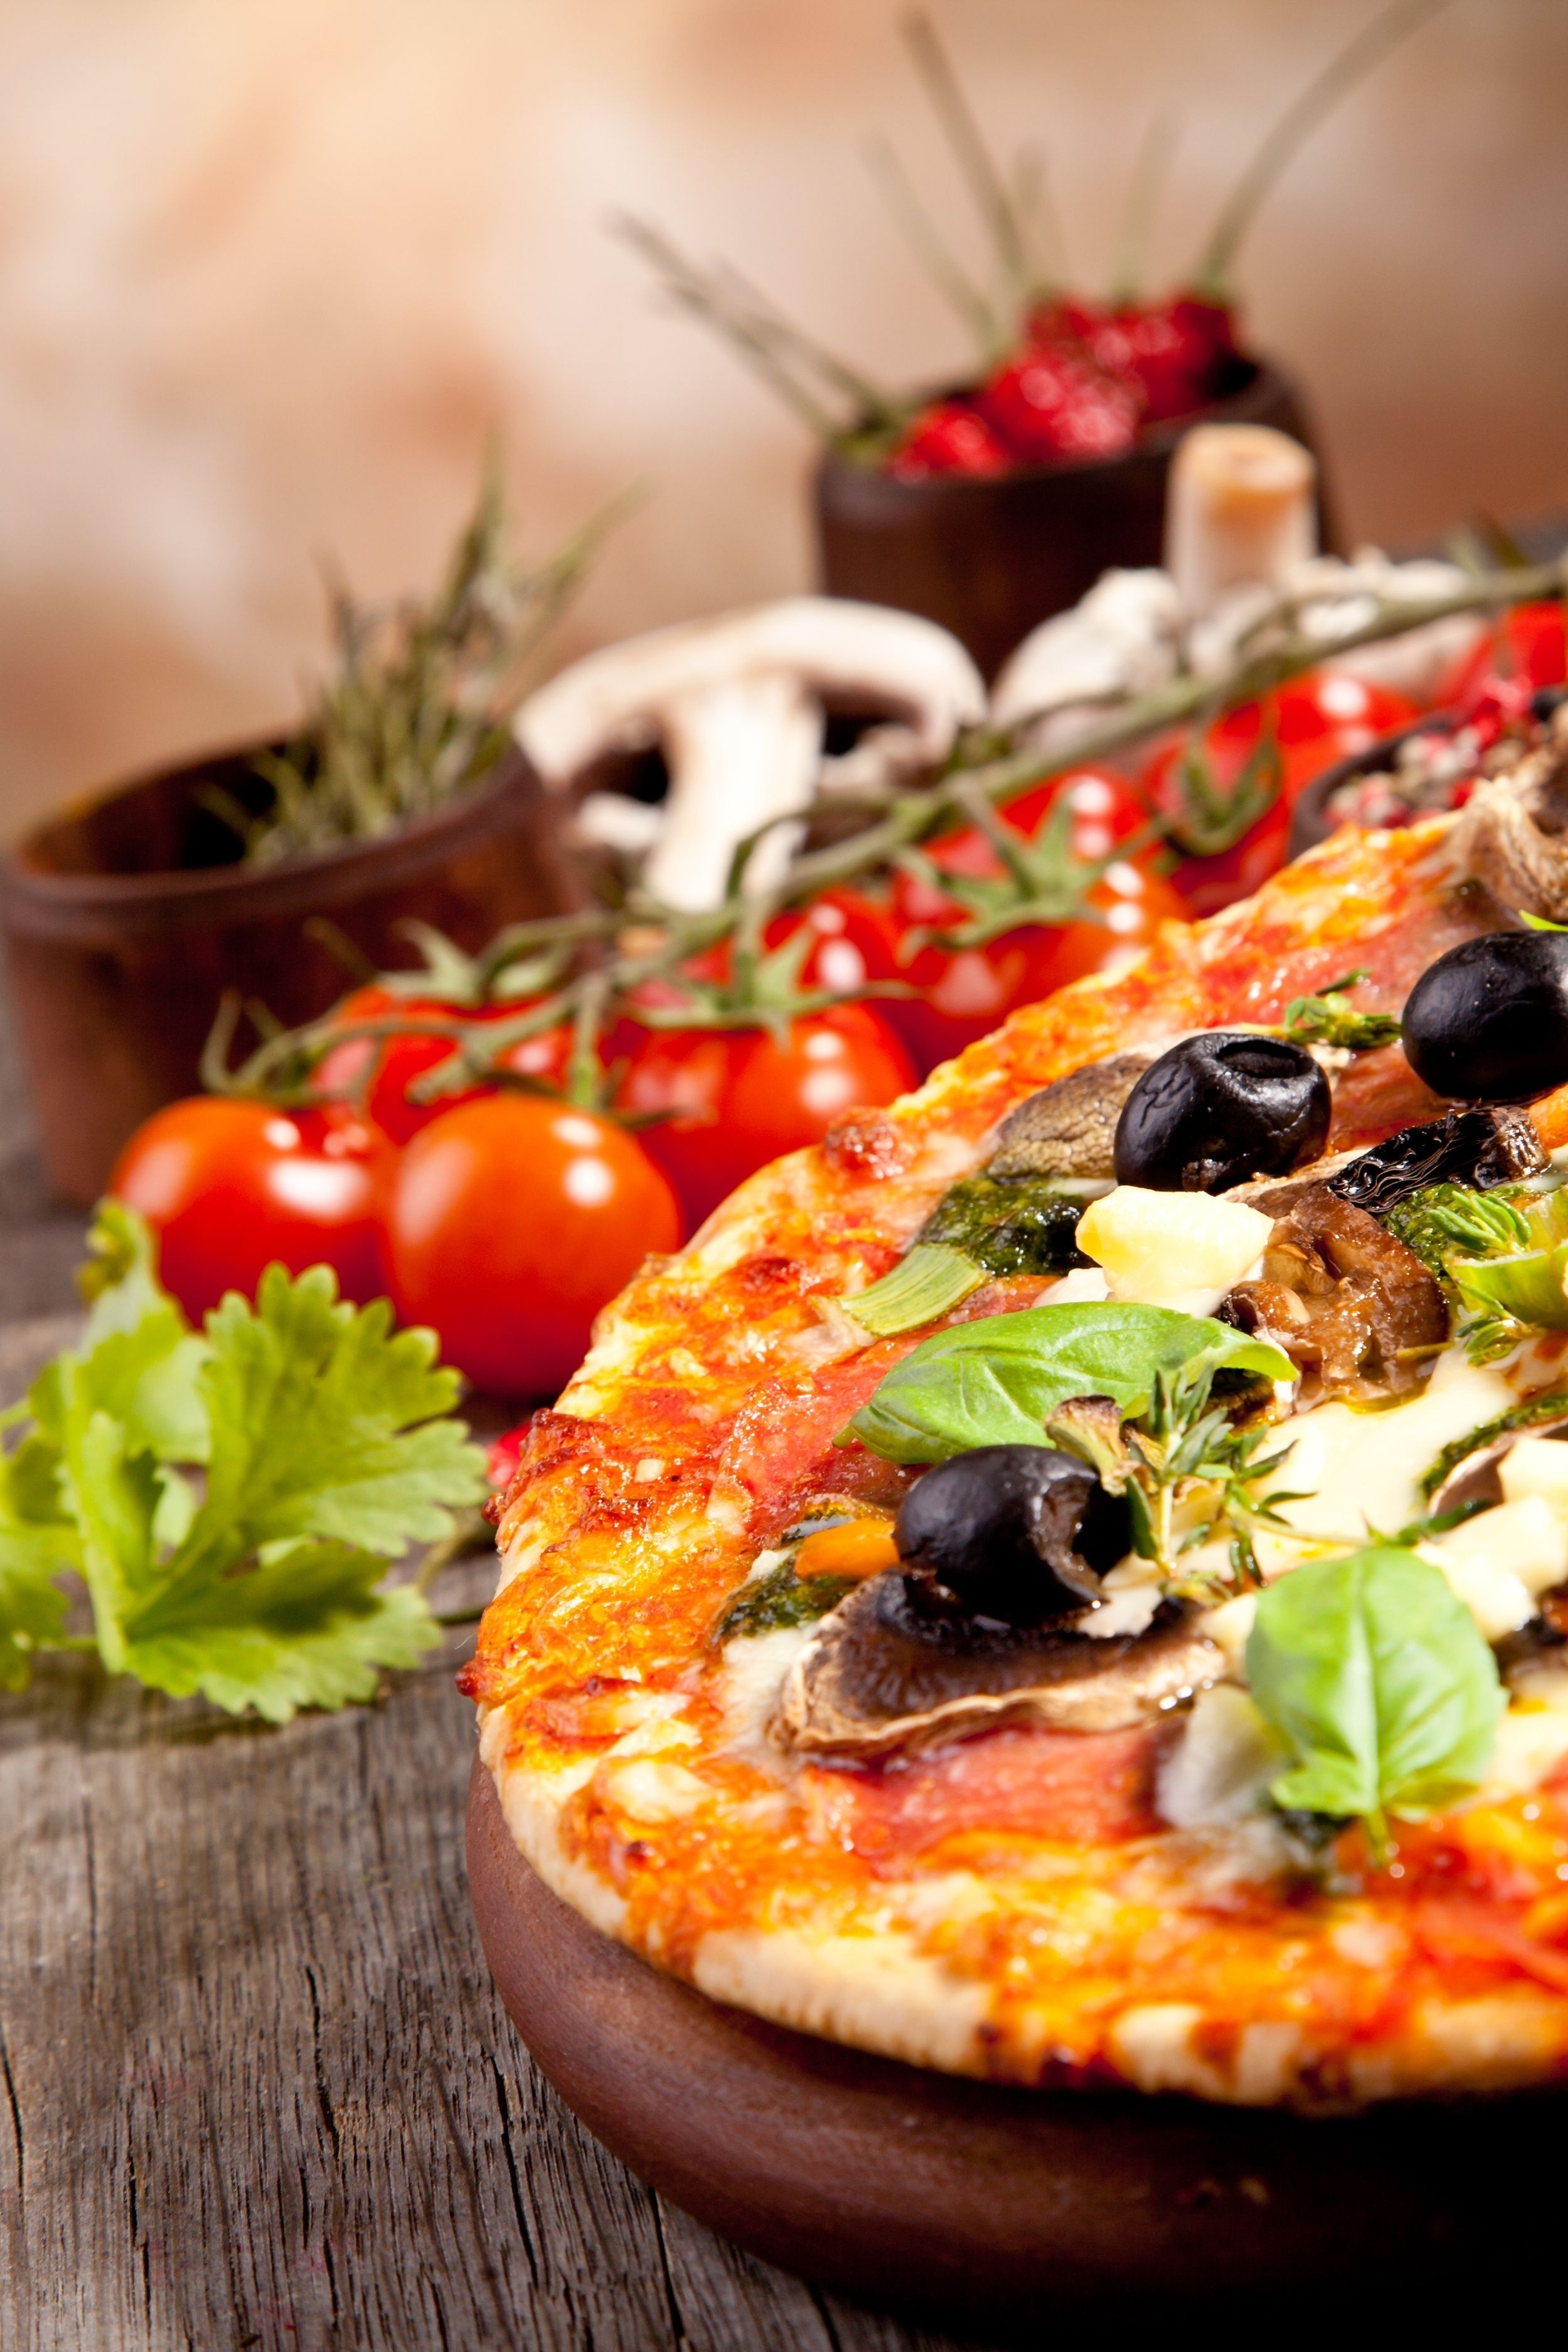 Image: Pizza, olives, greens, tomatoes, mushrooms